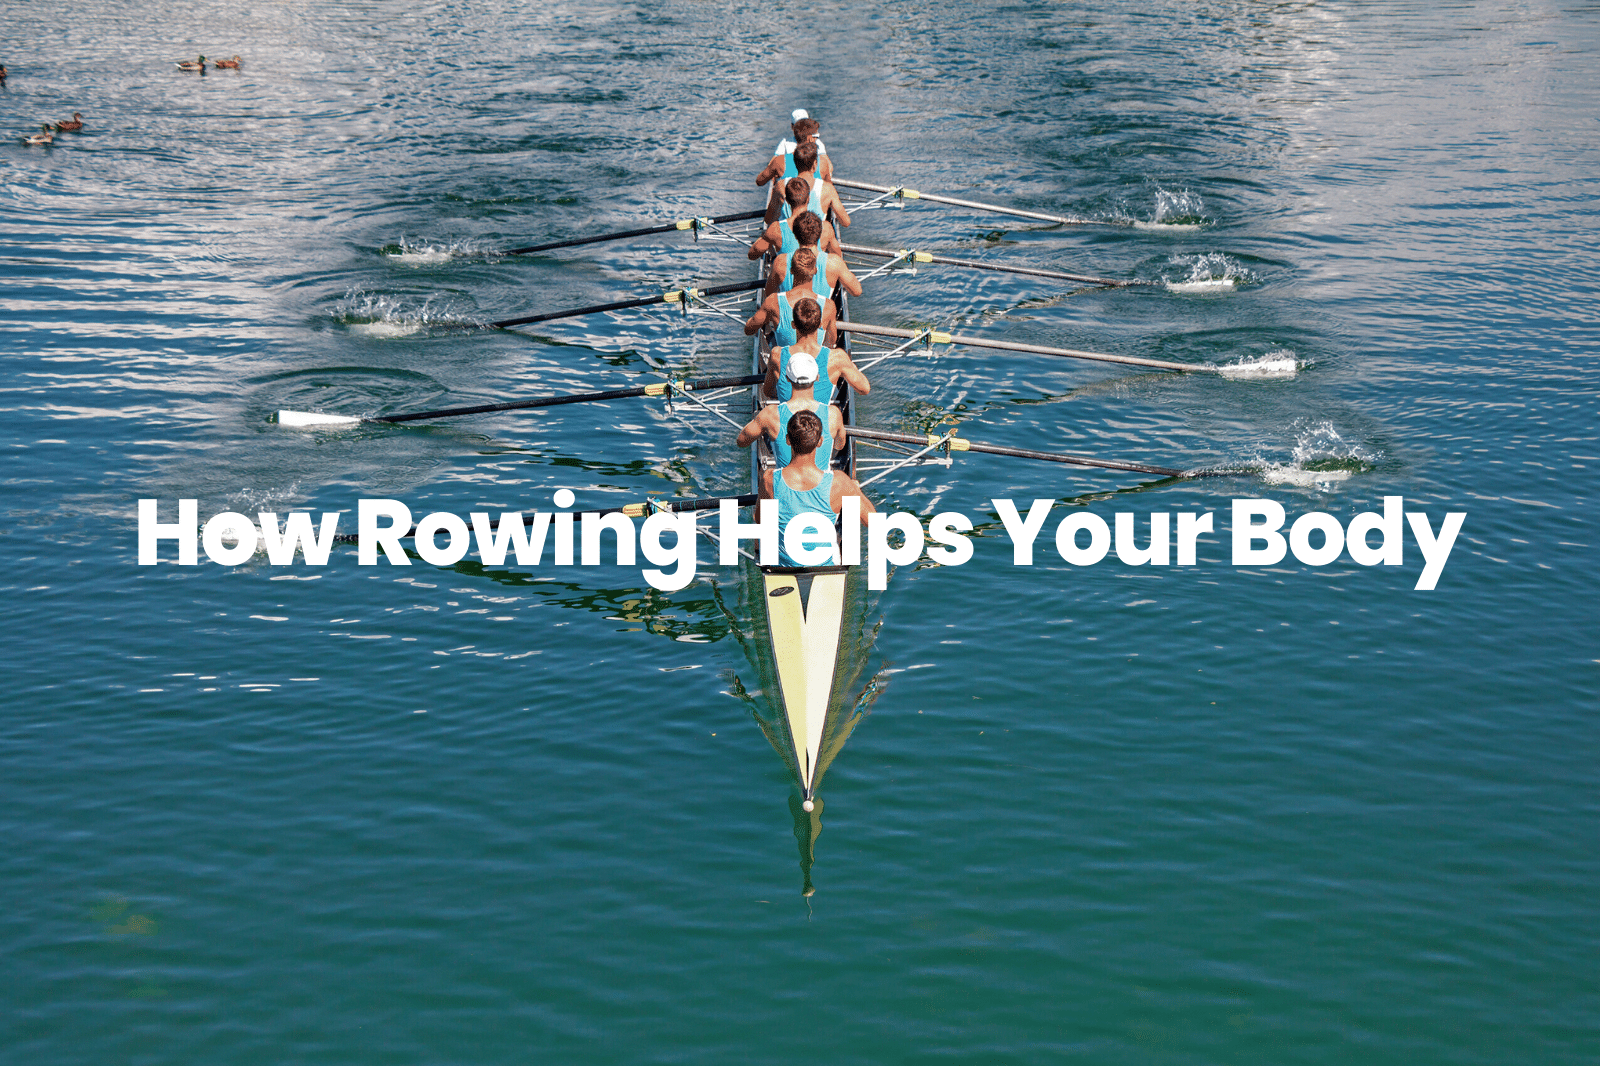 Rowing helps